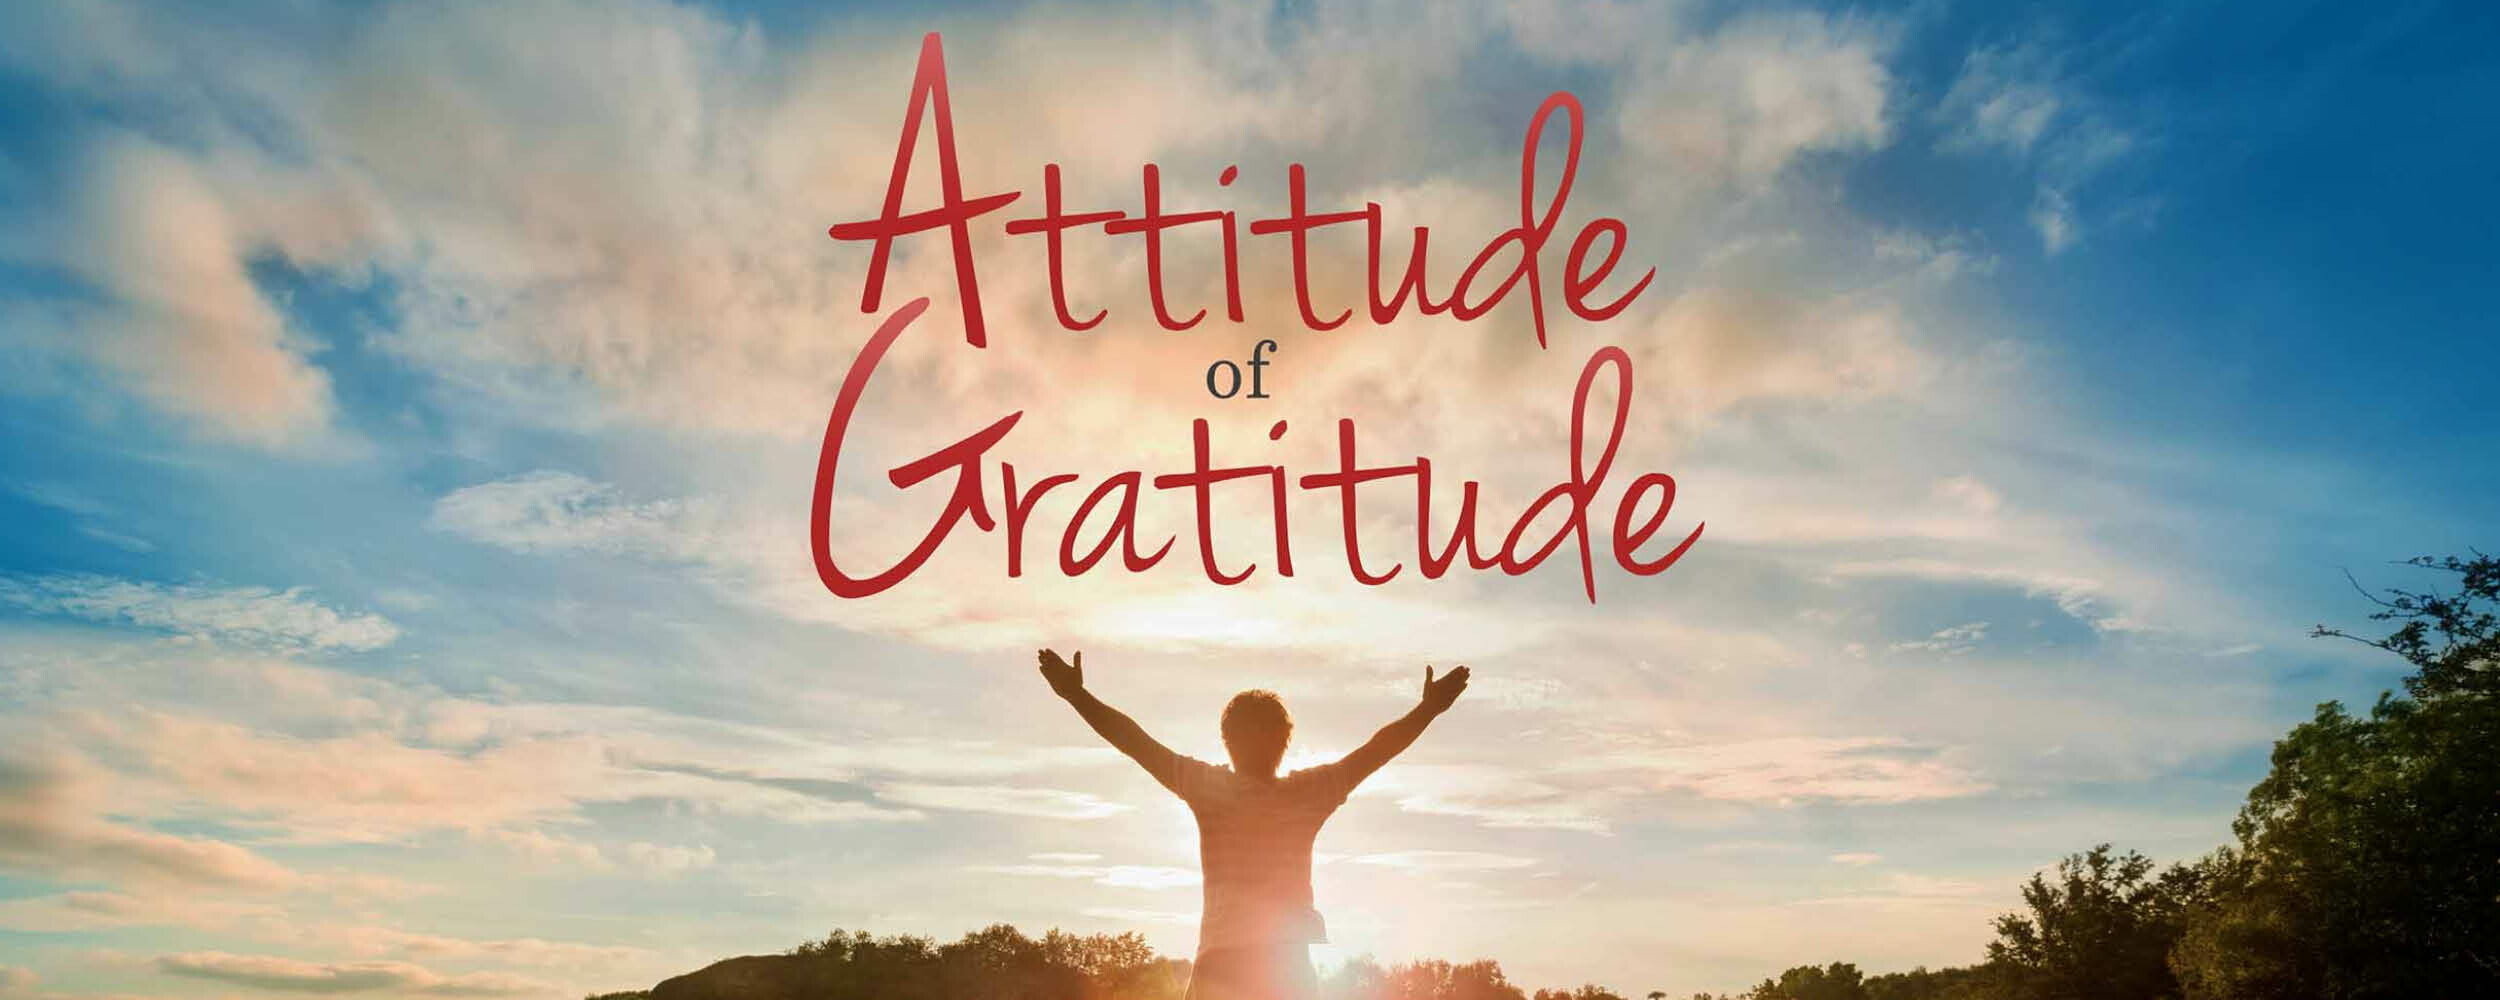 Attitude of Gratitude, Week 2